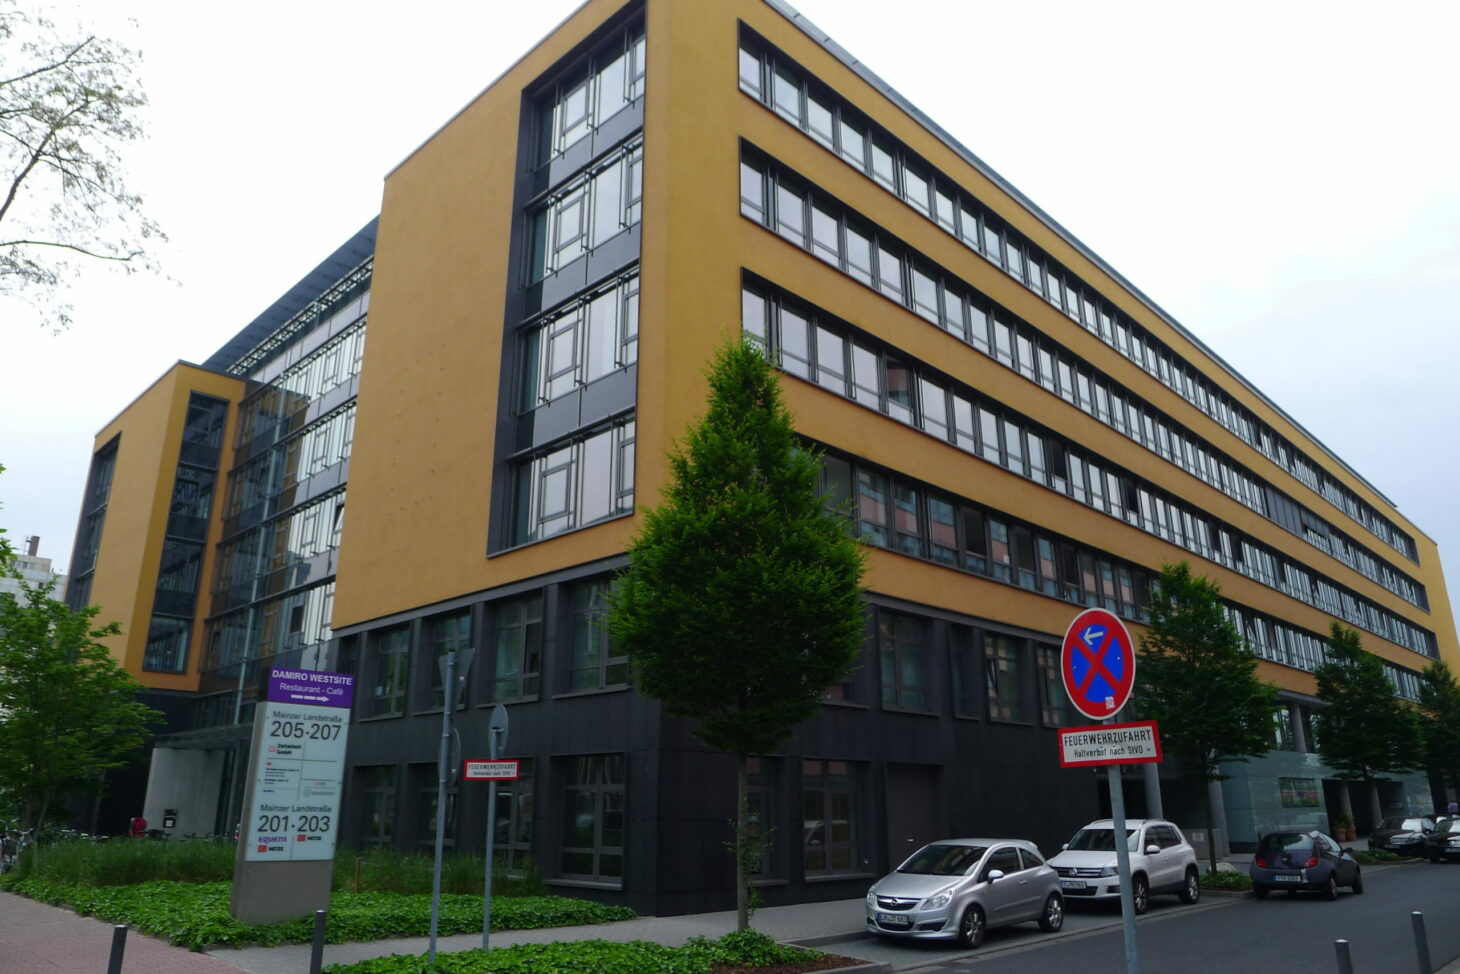 Exterior view of a yellow building, valantic branch Frankfurt am Main